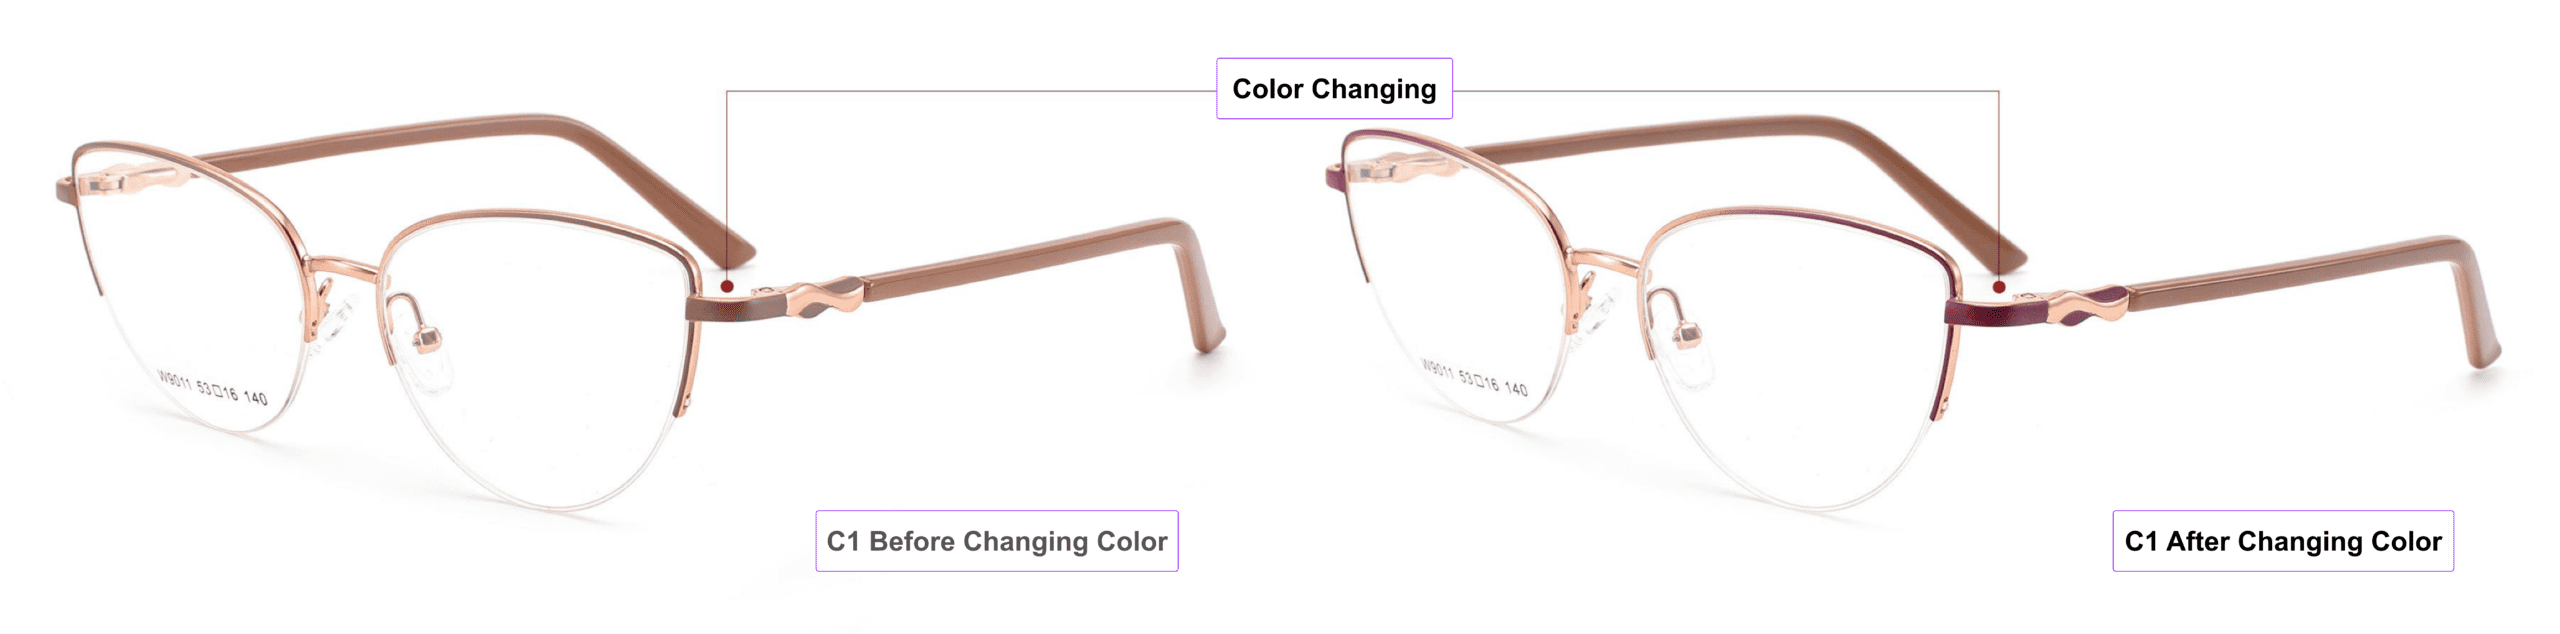 color changing glasses frames, China glasses wholesaler, eyeglass accessories, brown,magenta purple,pink gold, cat eye glasses